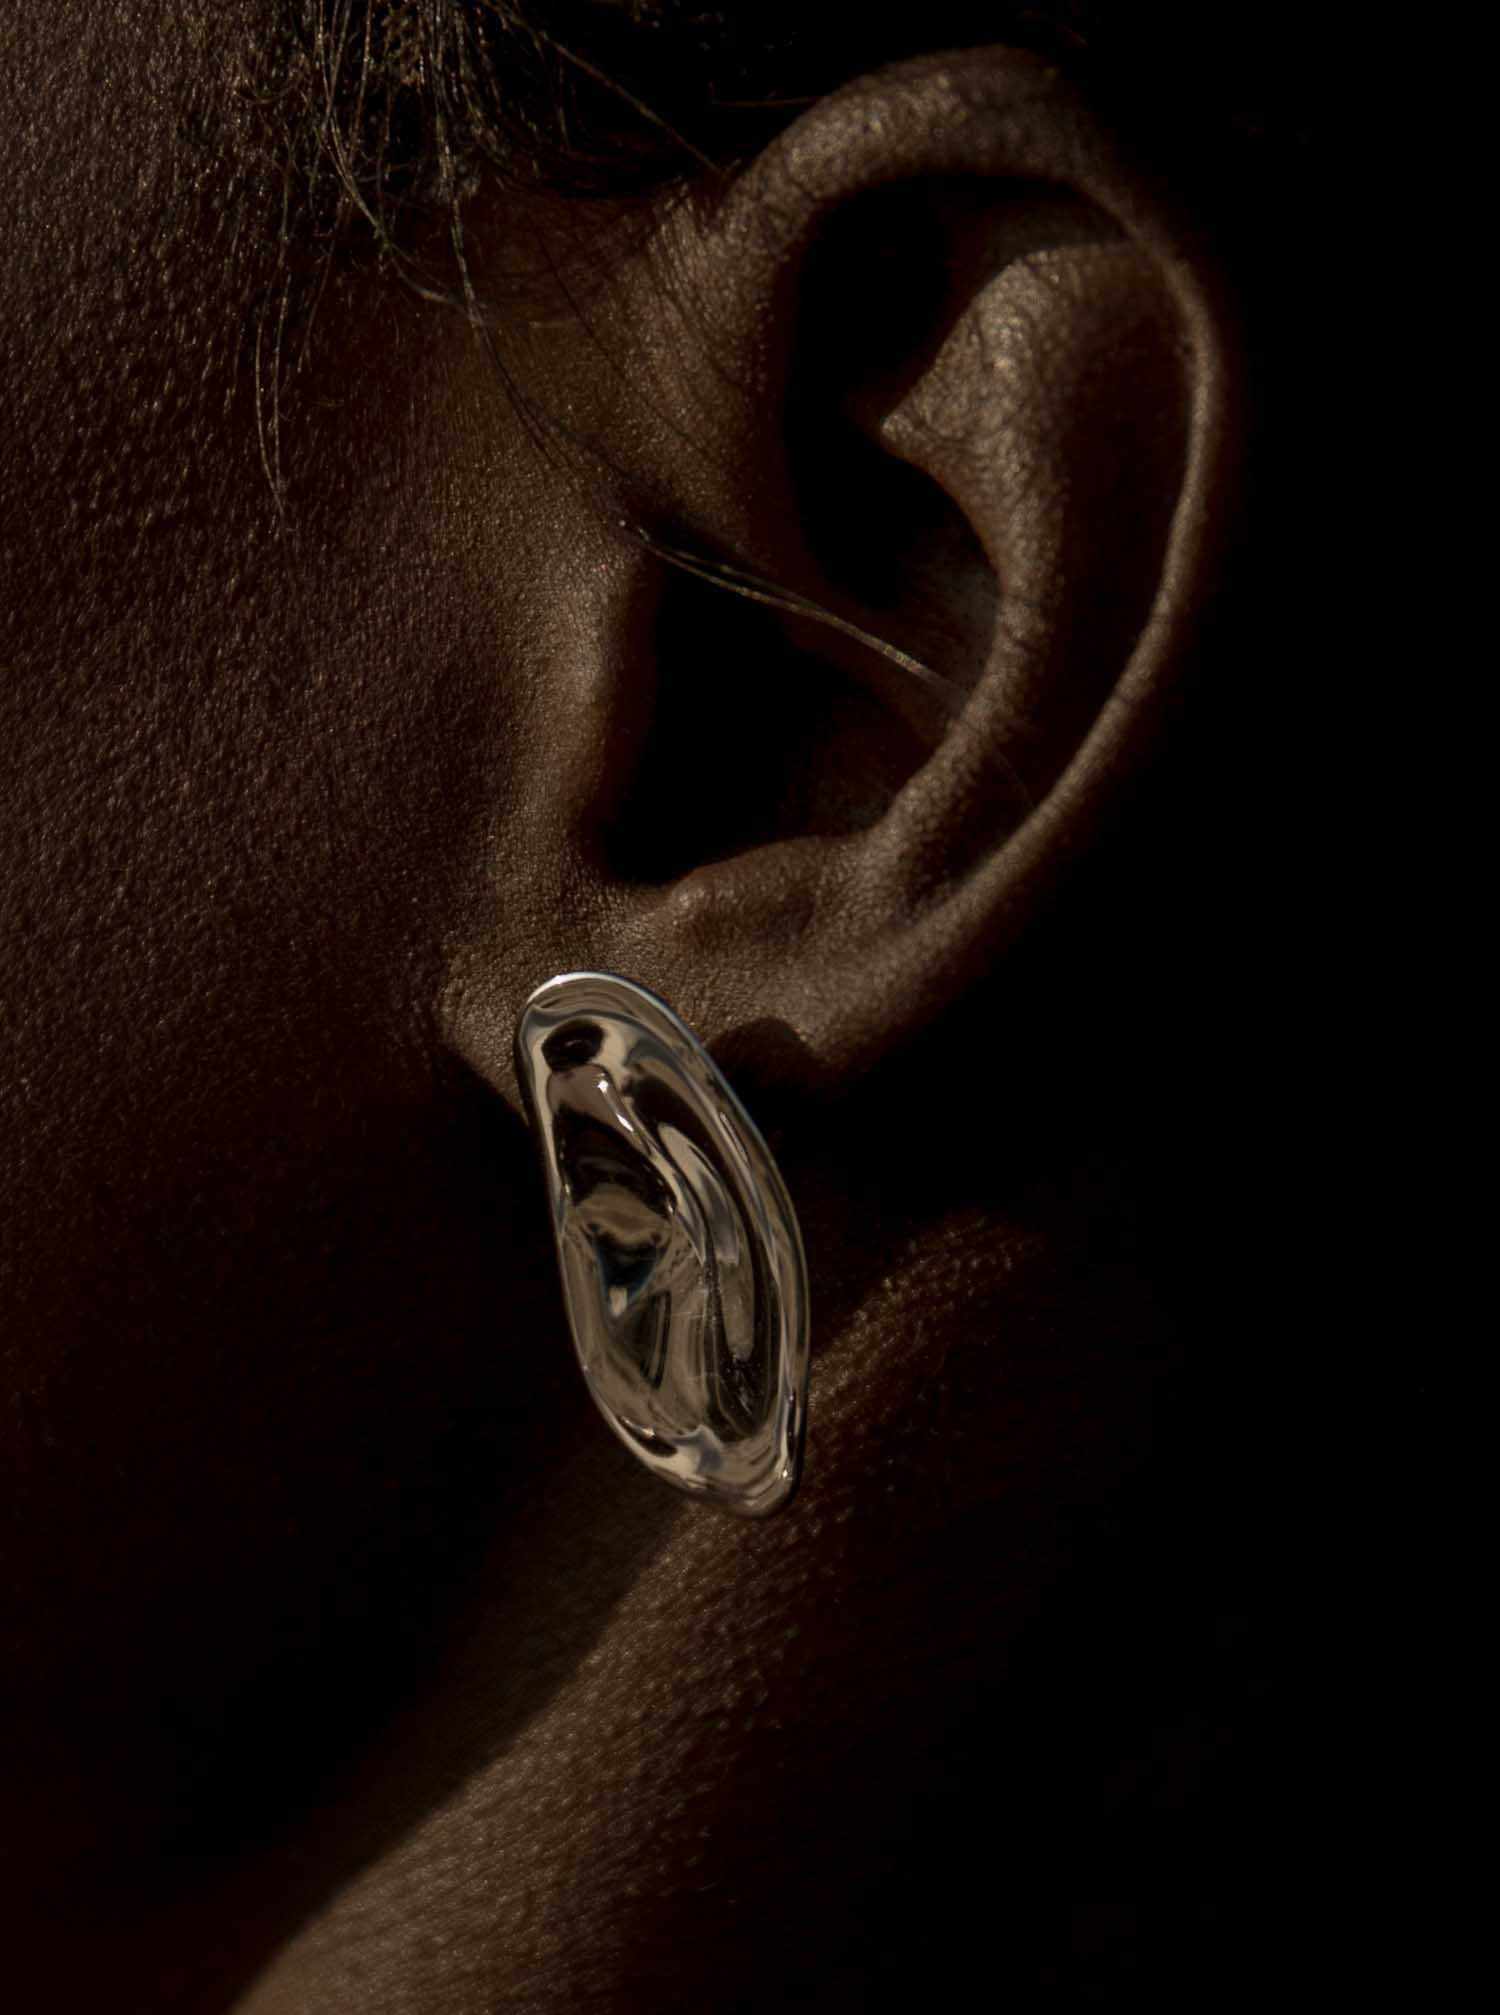 Earrings - Original earrings with liquid convex design